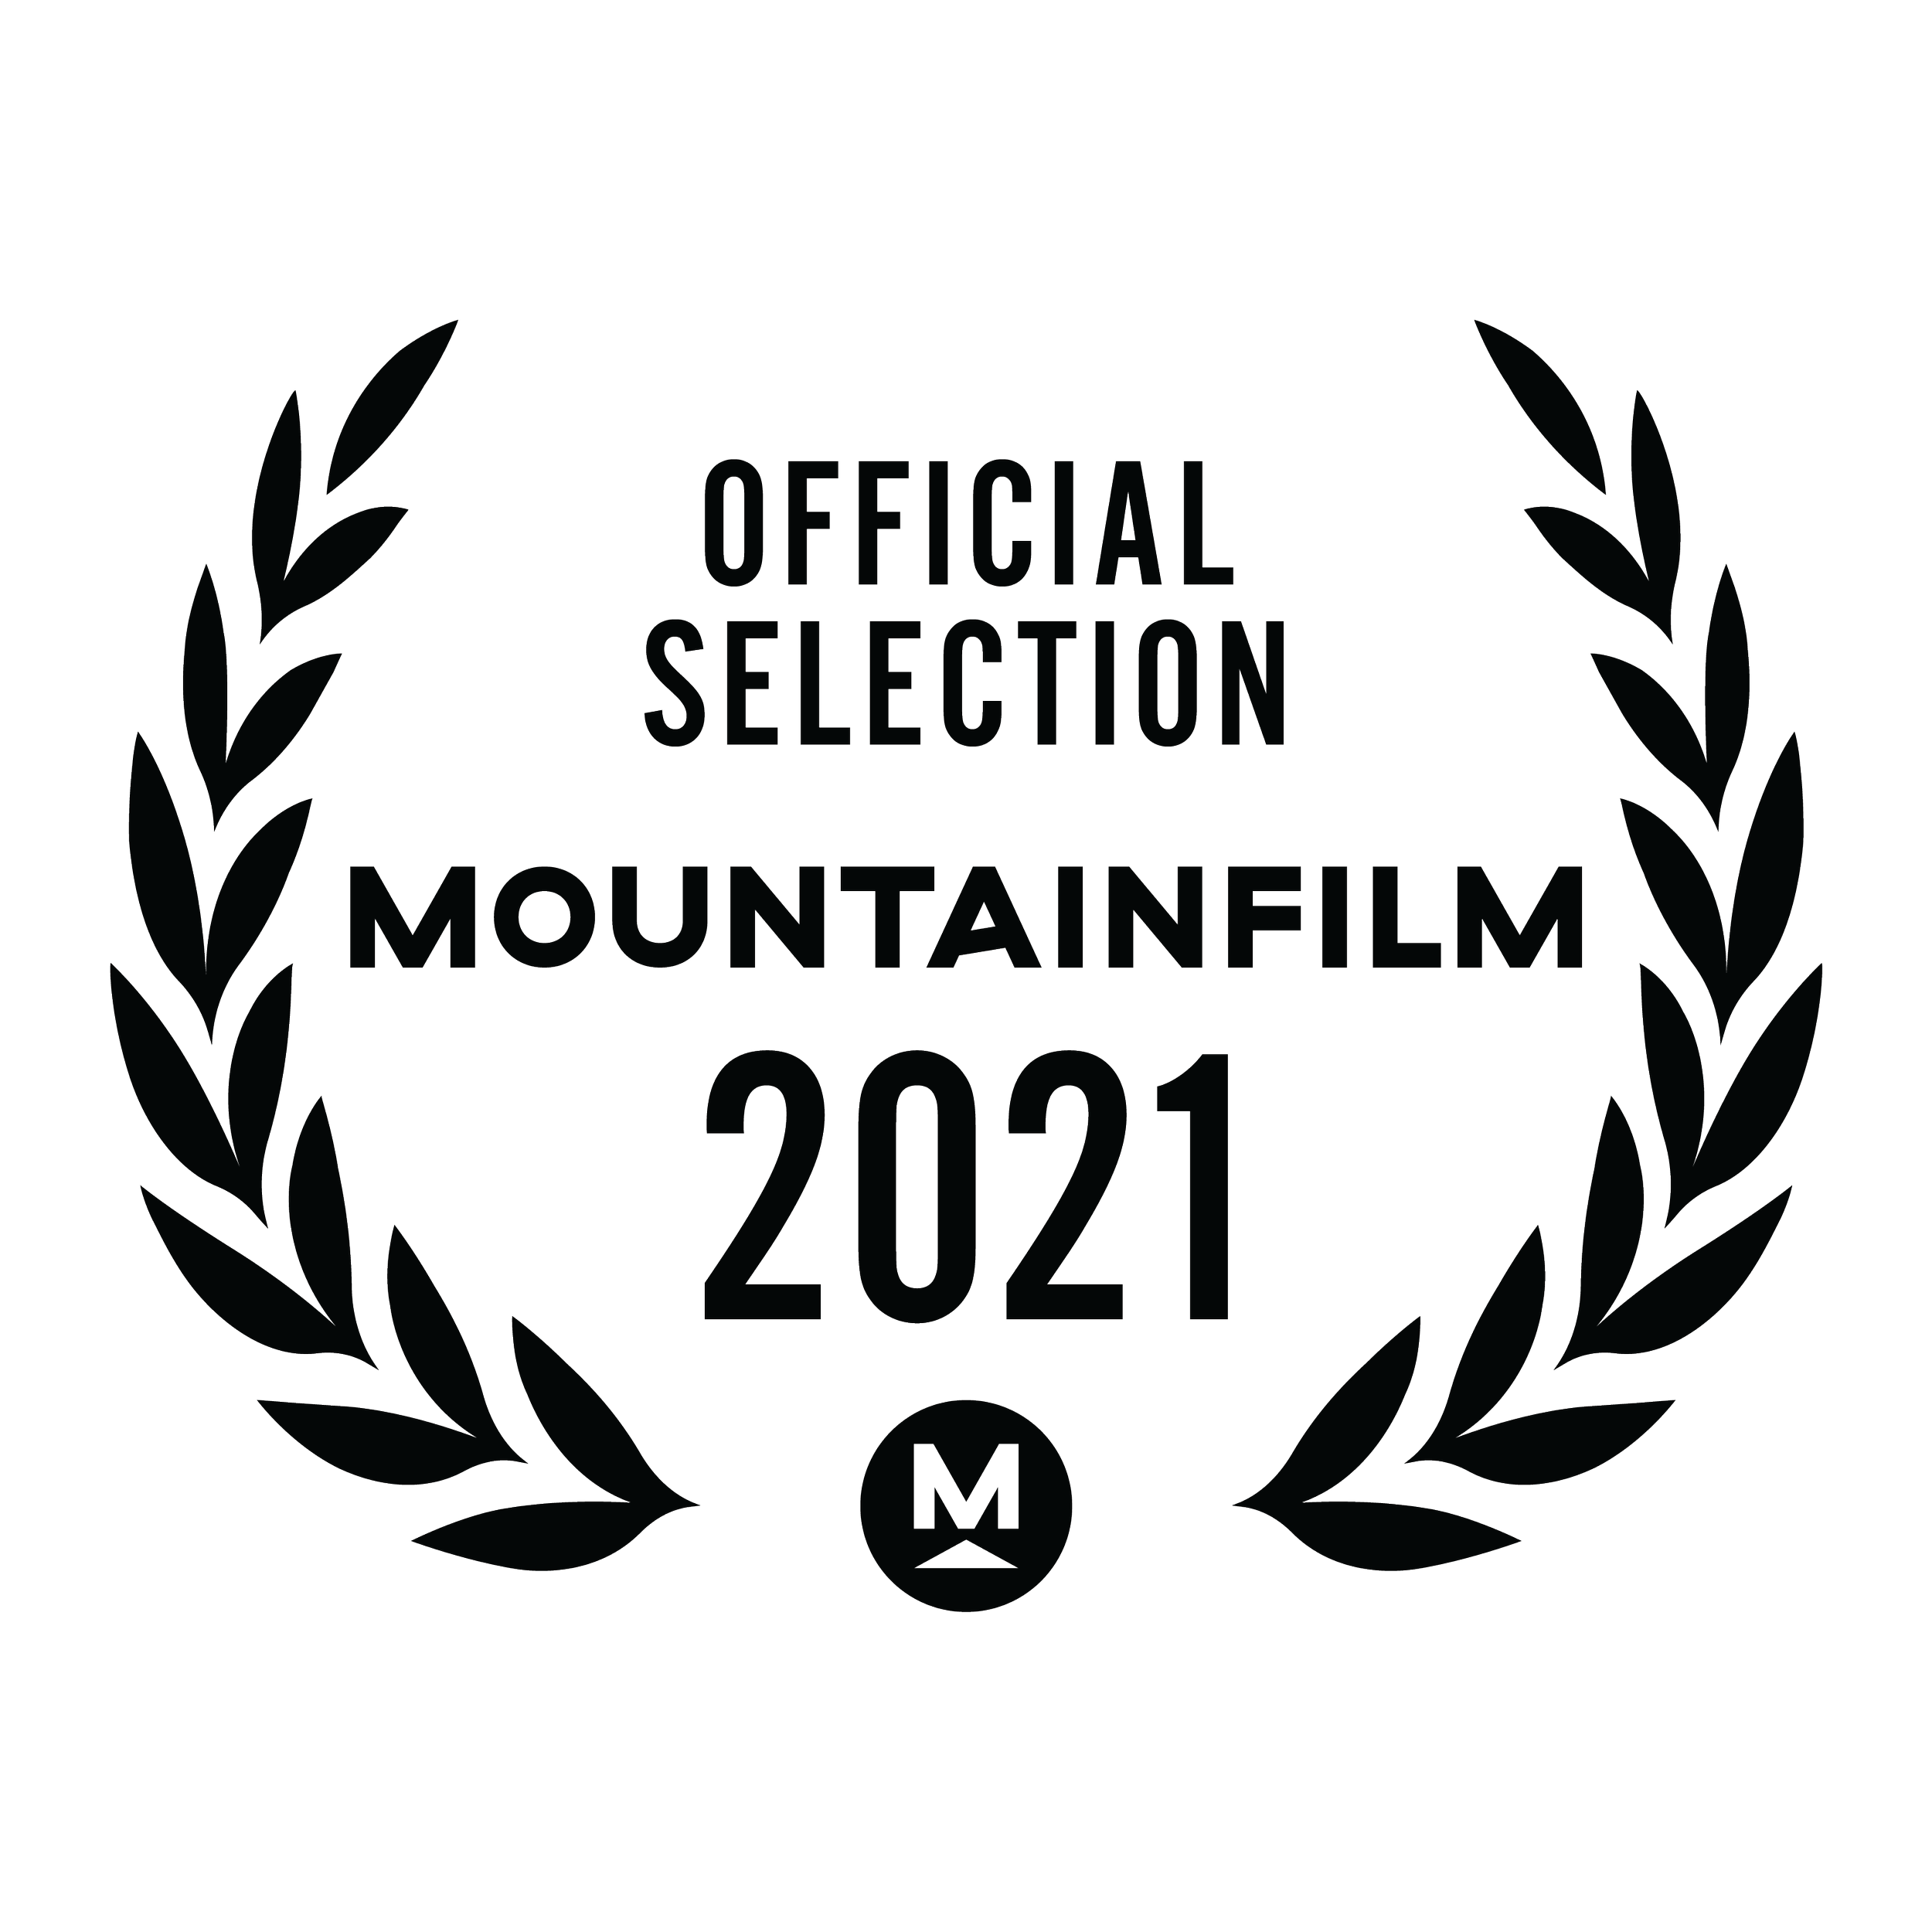 Mountainfilm2021-OfficialSelection-Black.png